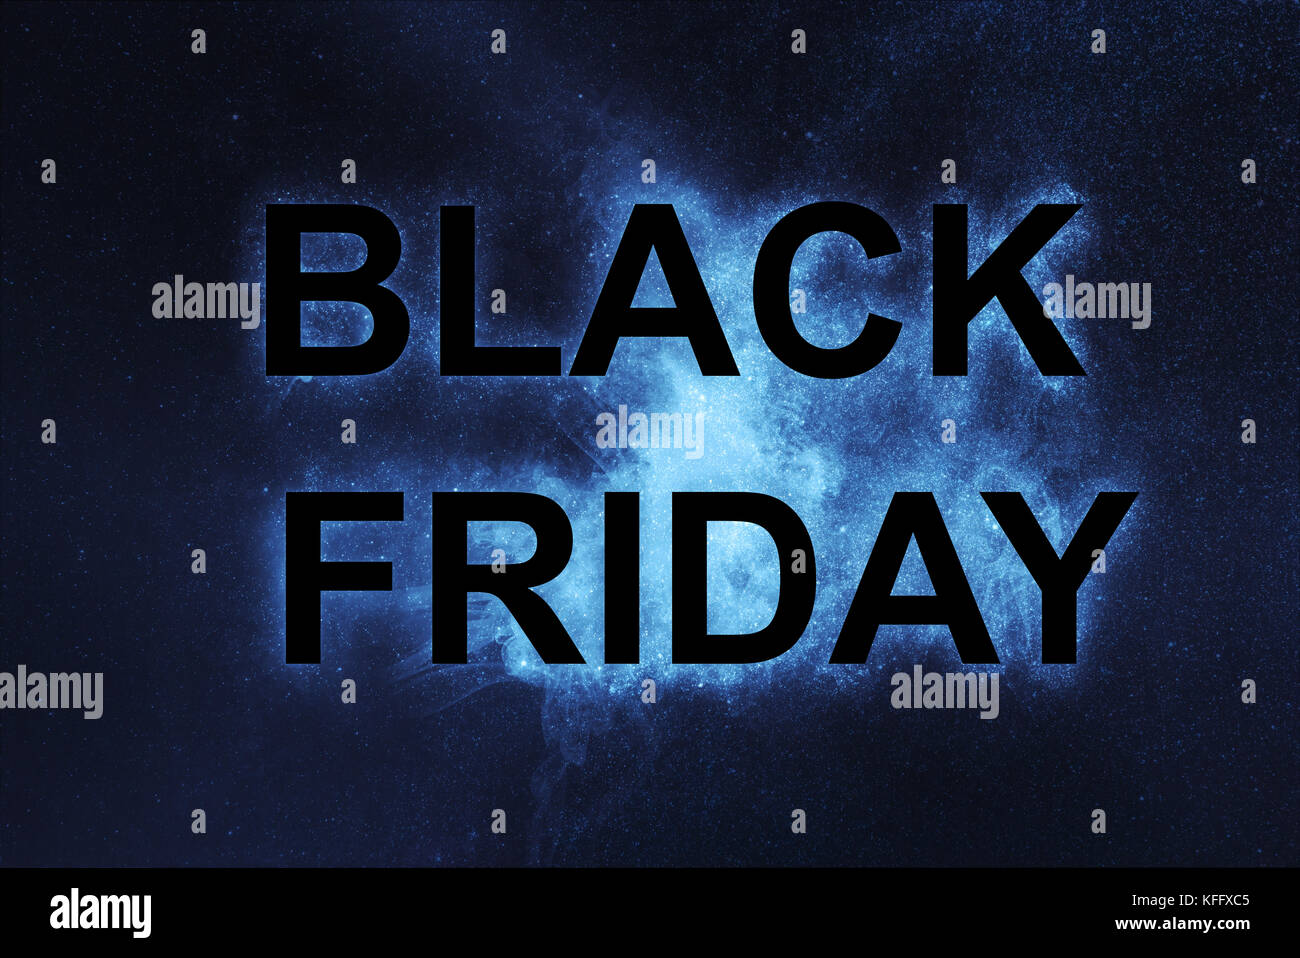 Black Friday Sale Poster. Black Friday banner. Stock Photo